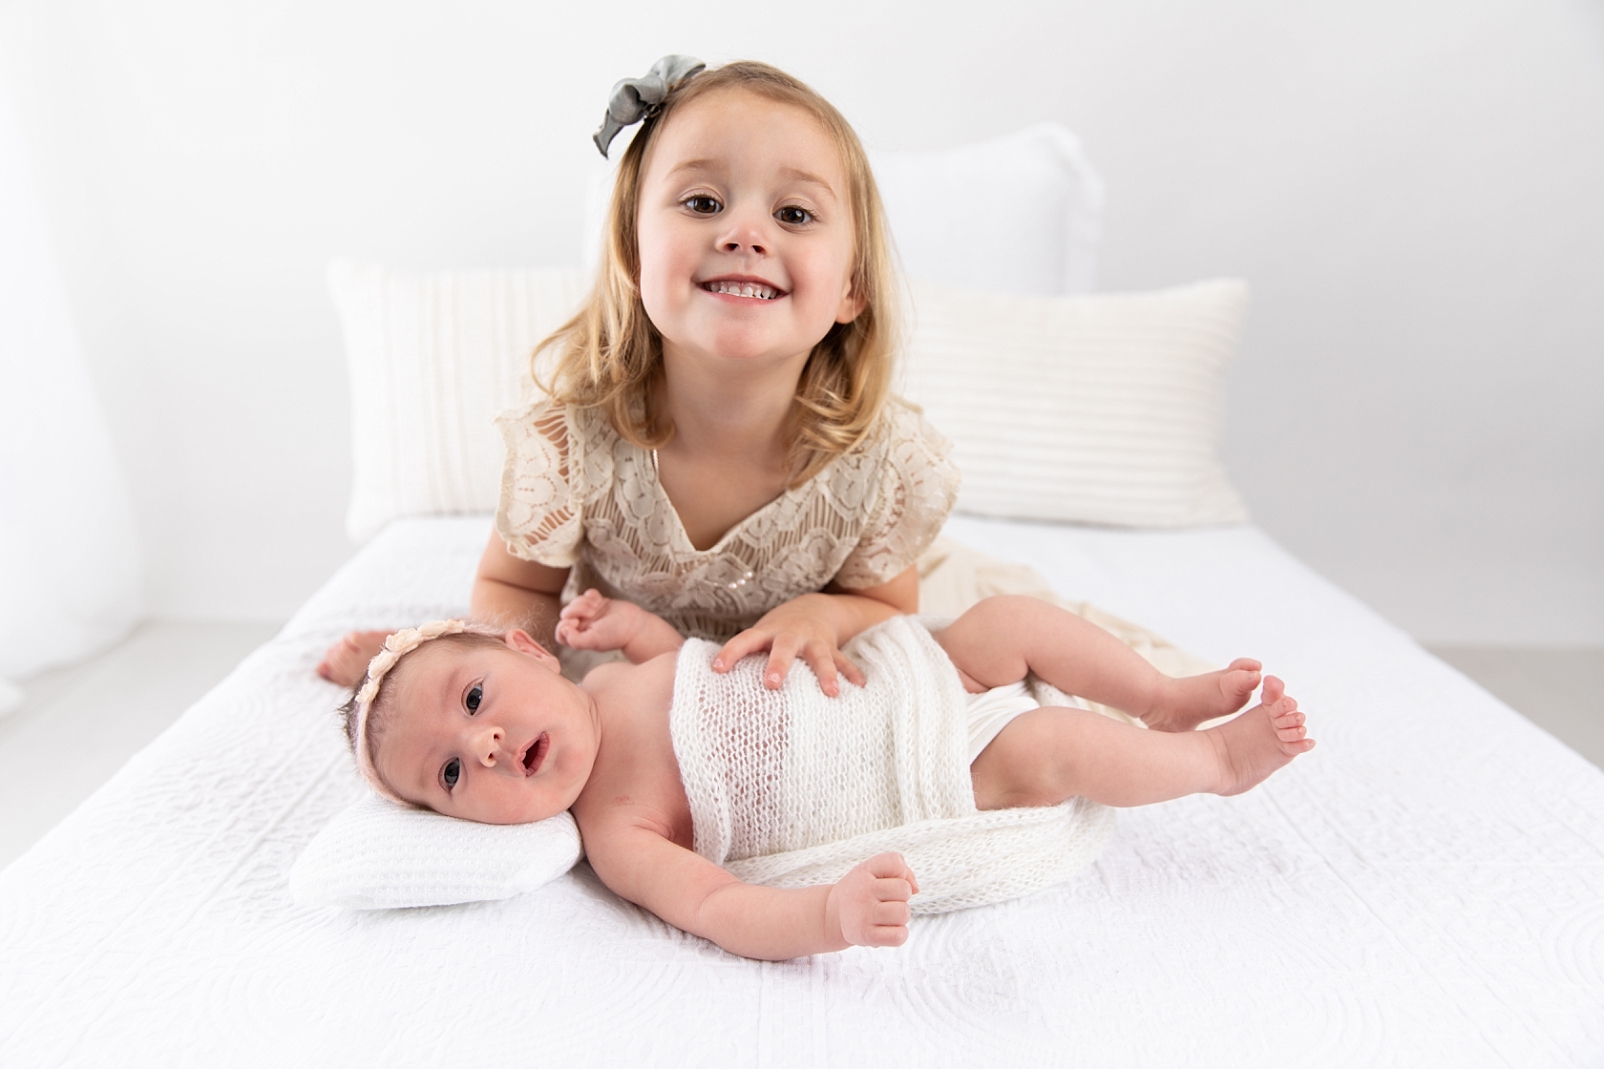 Little girl with her newborn sister with Ellicott City Newborn Photographer
